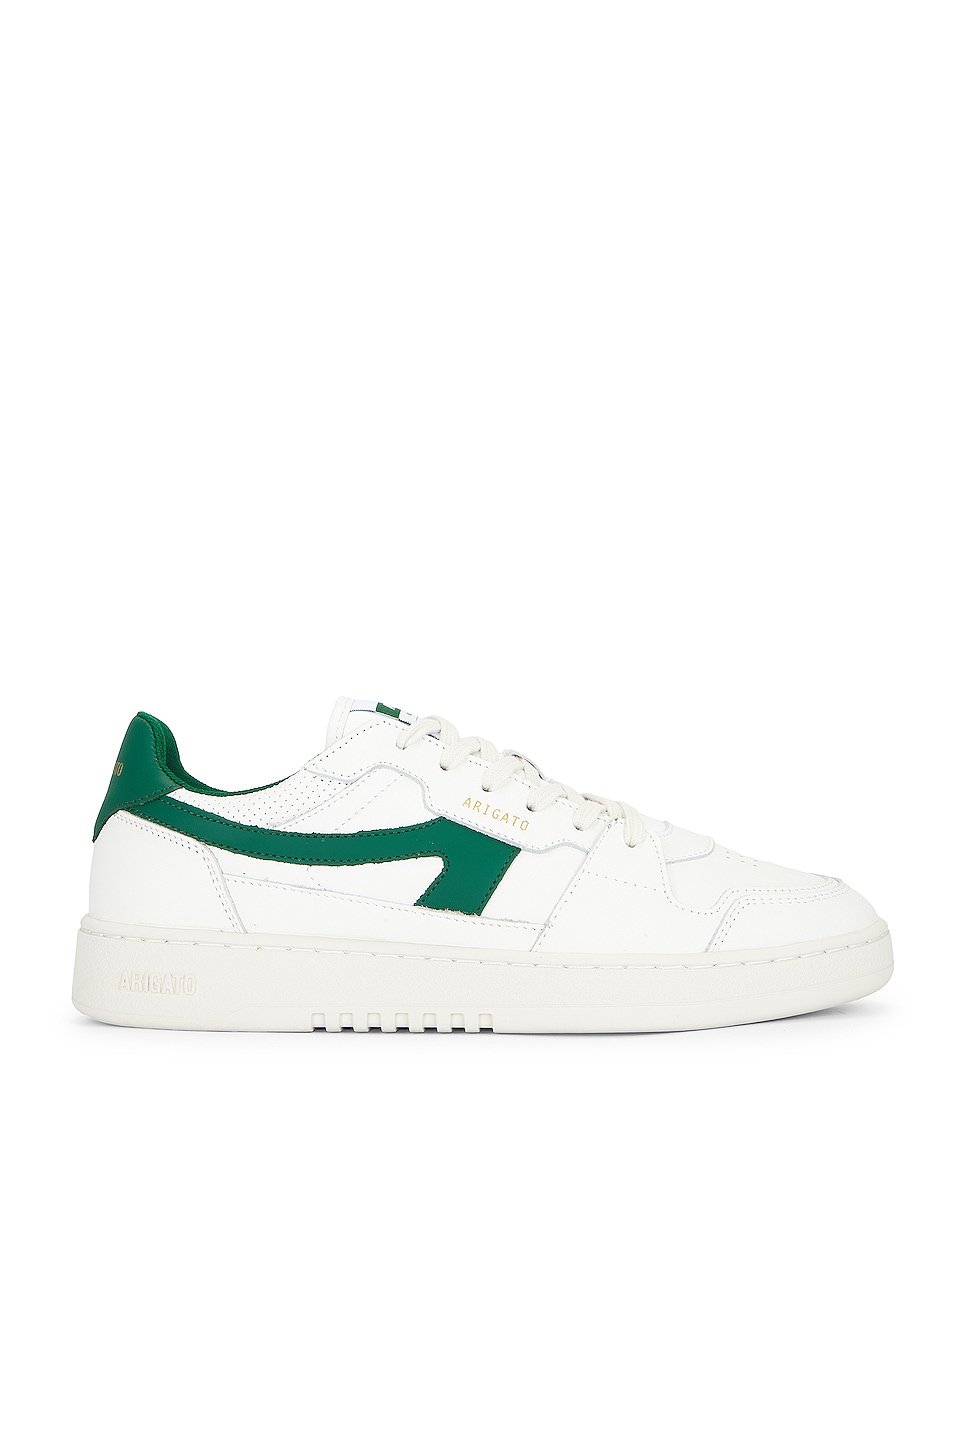 Image 1 of Axel Arigato Dice Stripe Sneaker in White & Green